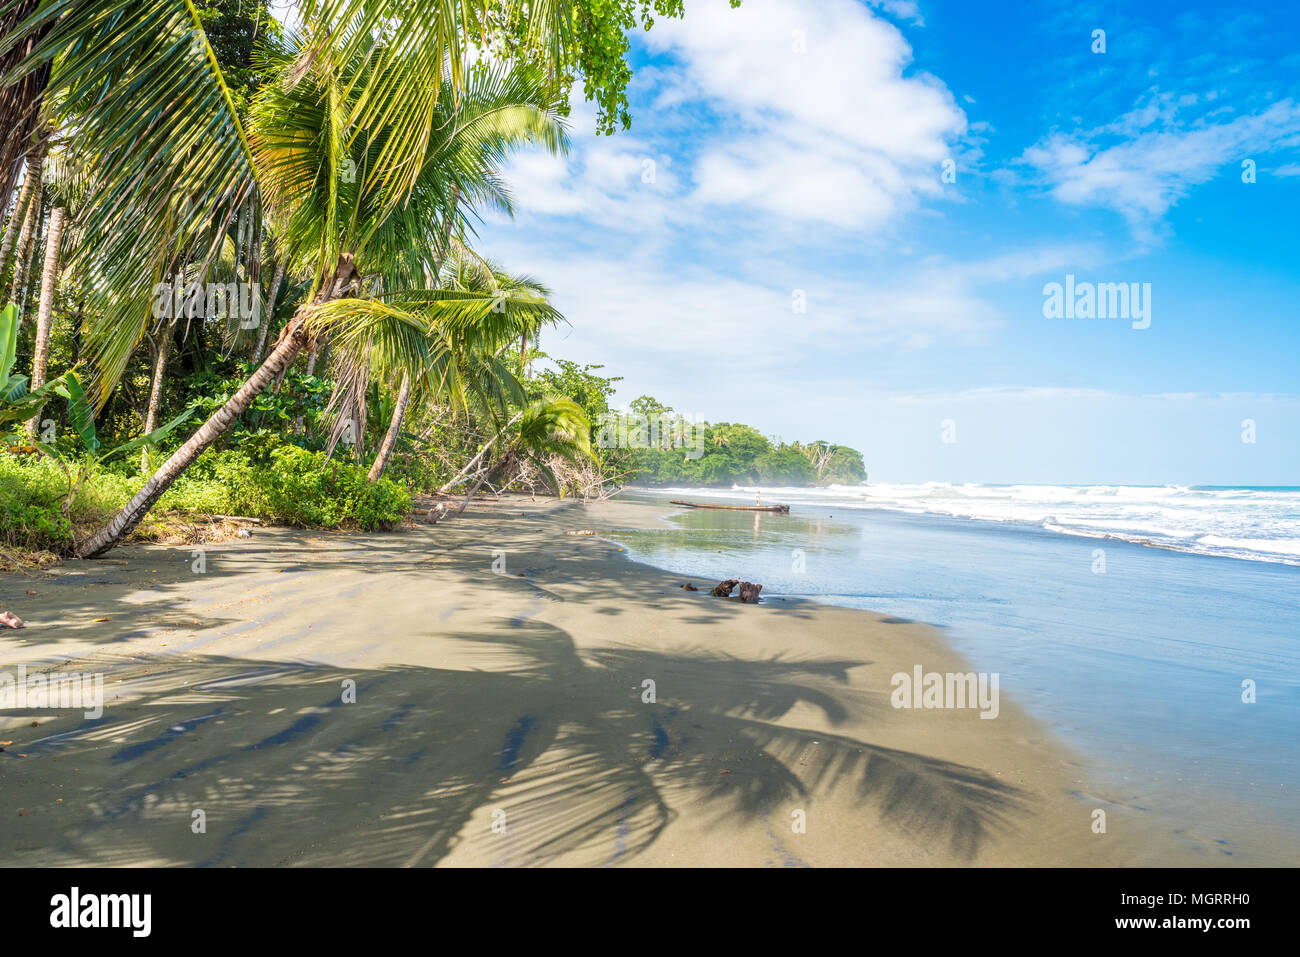 Playa Negra / Caribbean Coast / Costa Rica // World Beach Guide